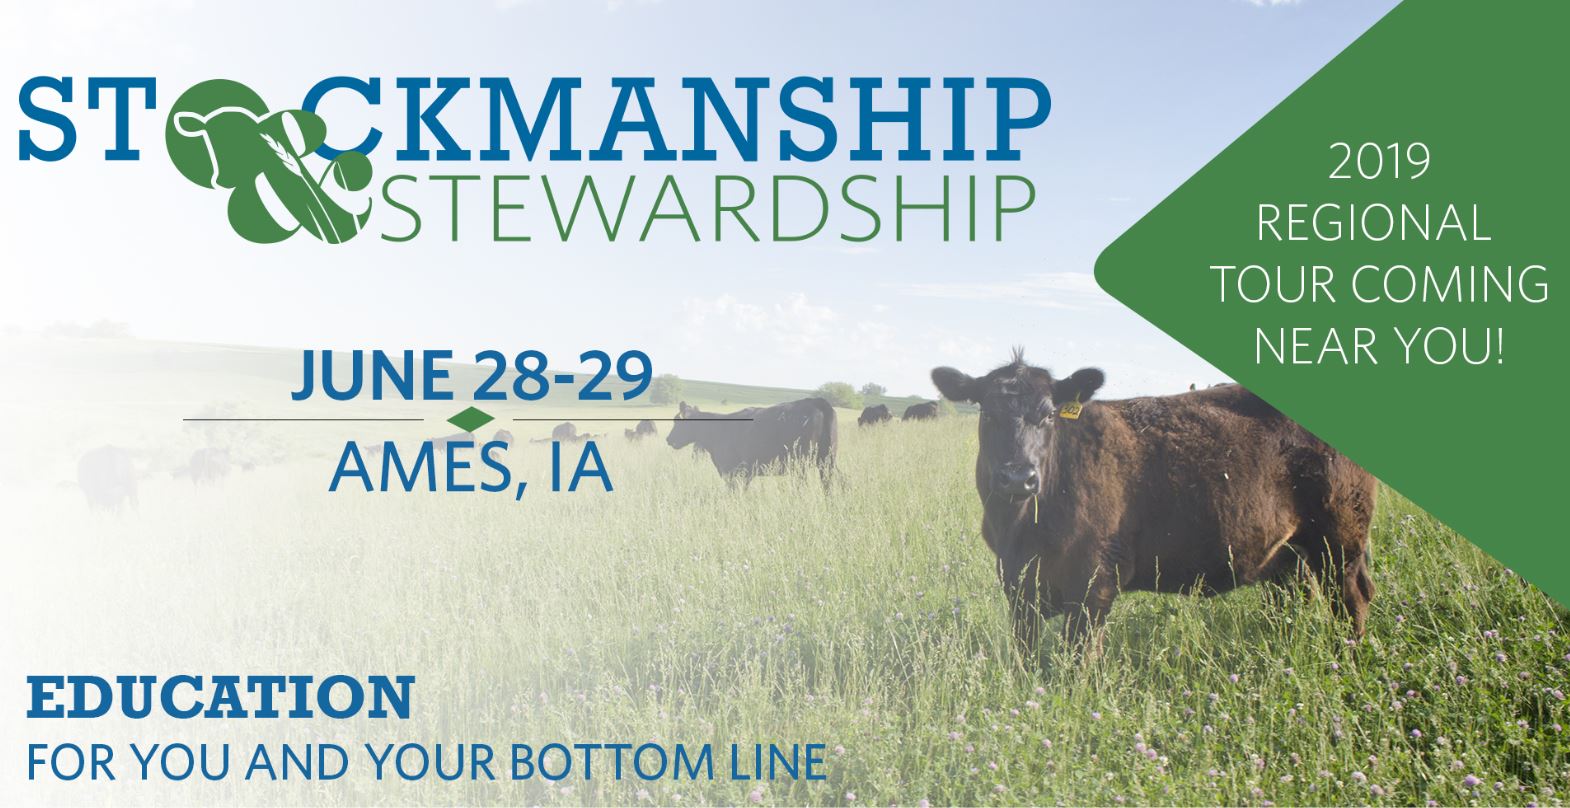 Stockmanship & Stewardship Event June 28-29 in Ames